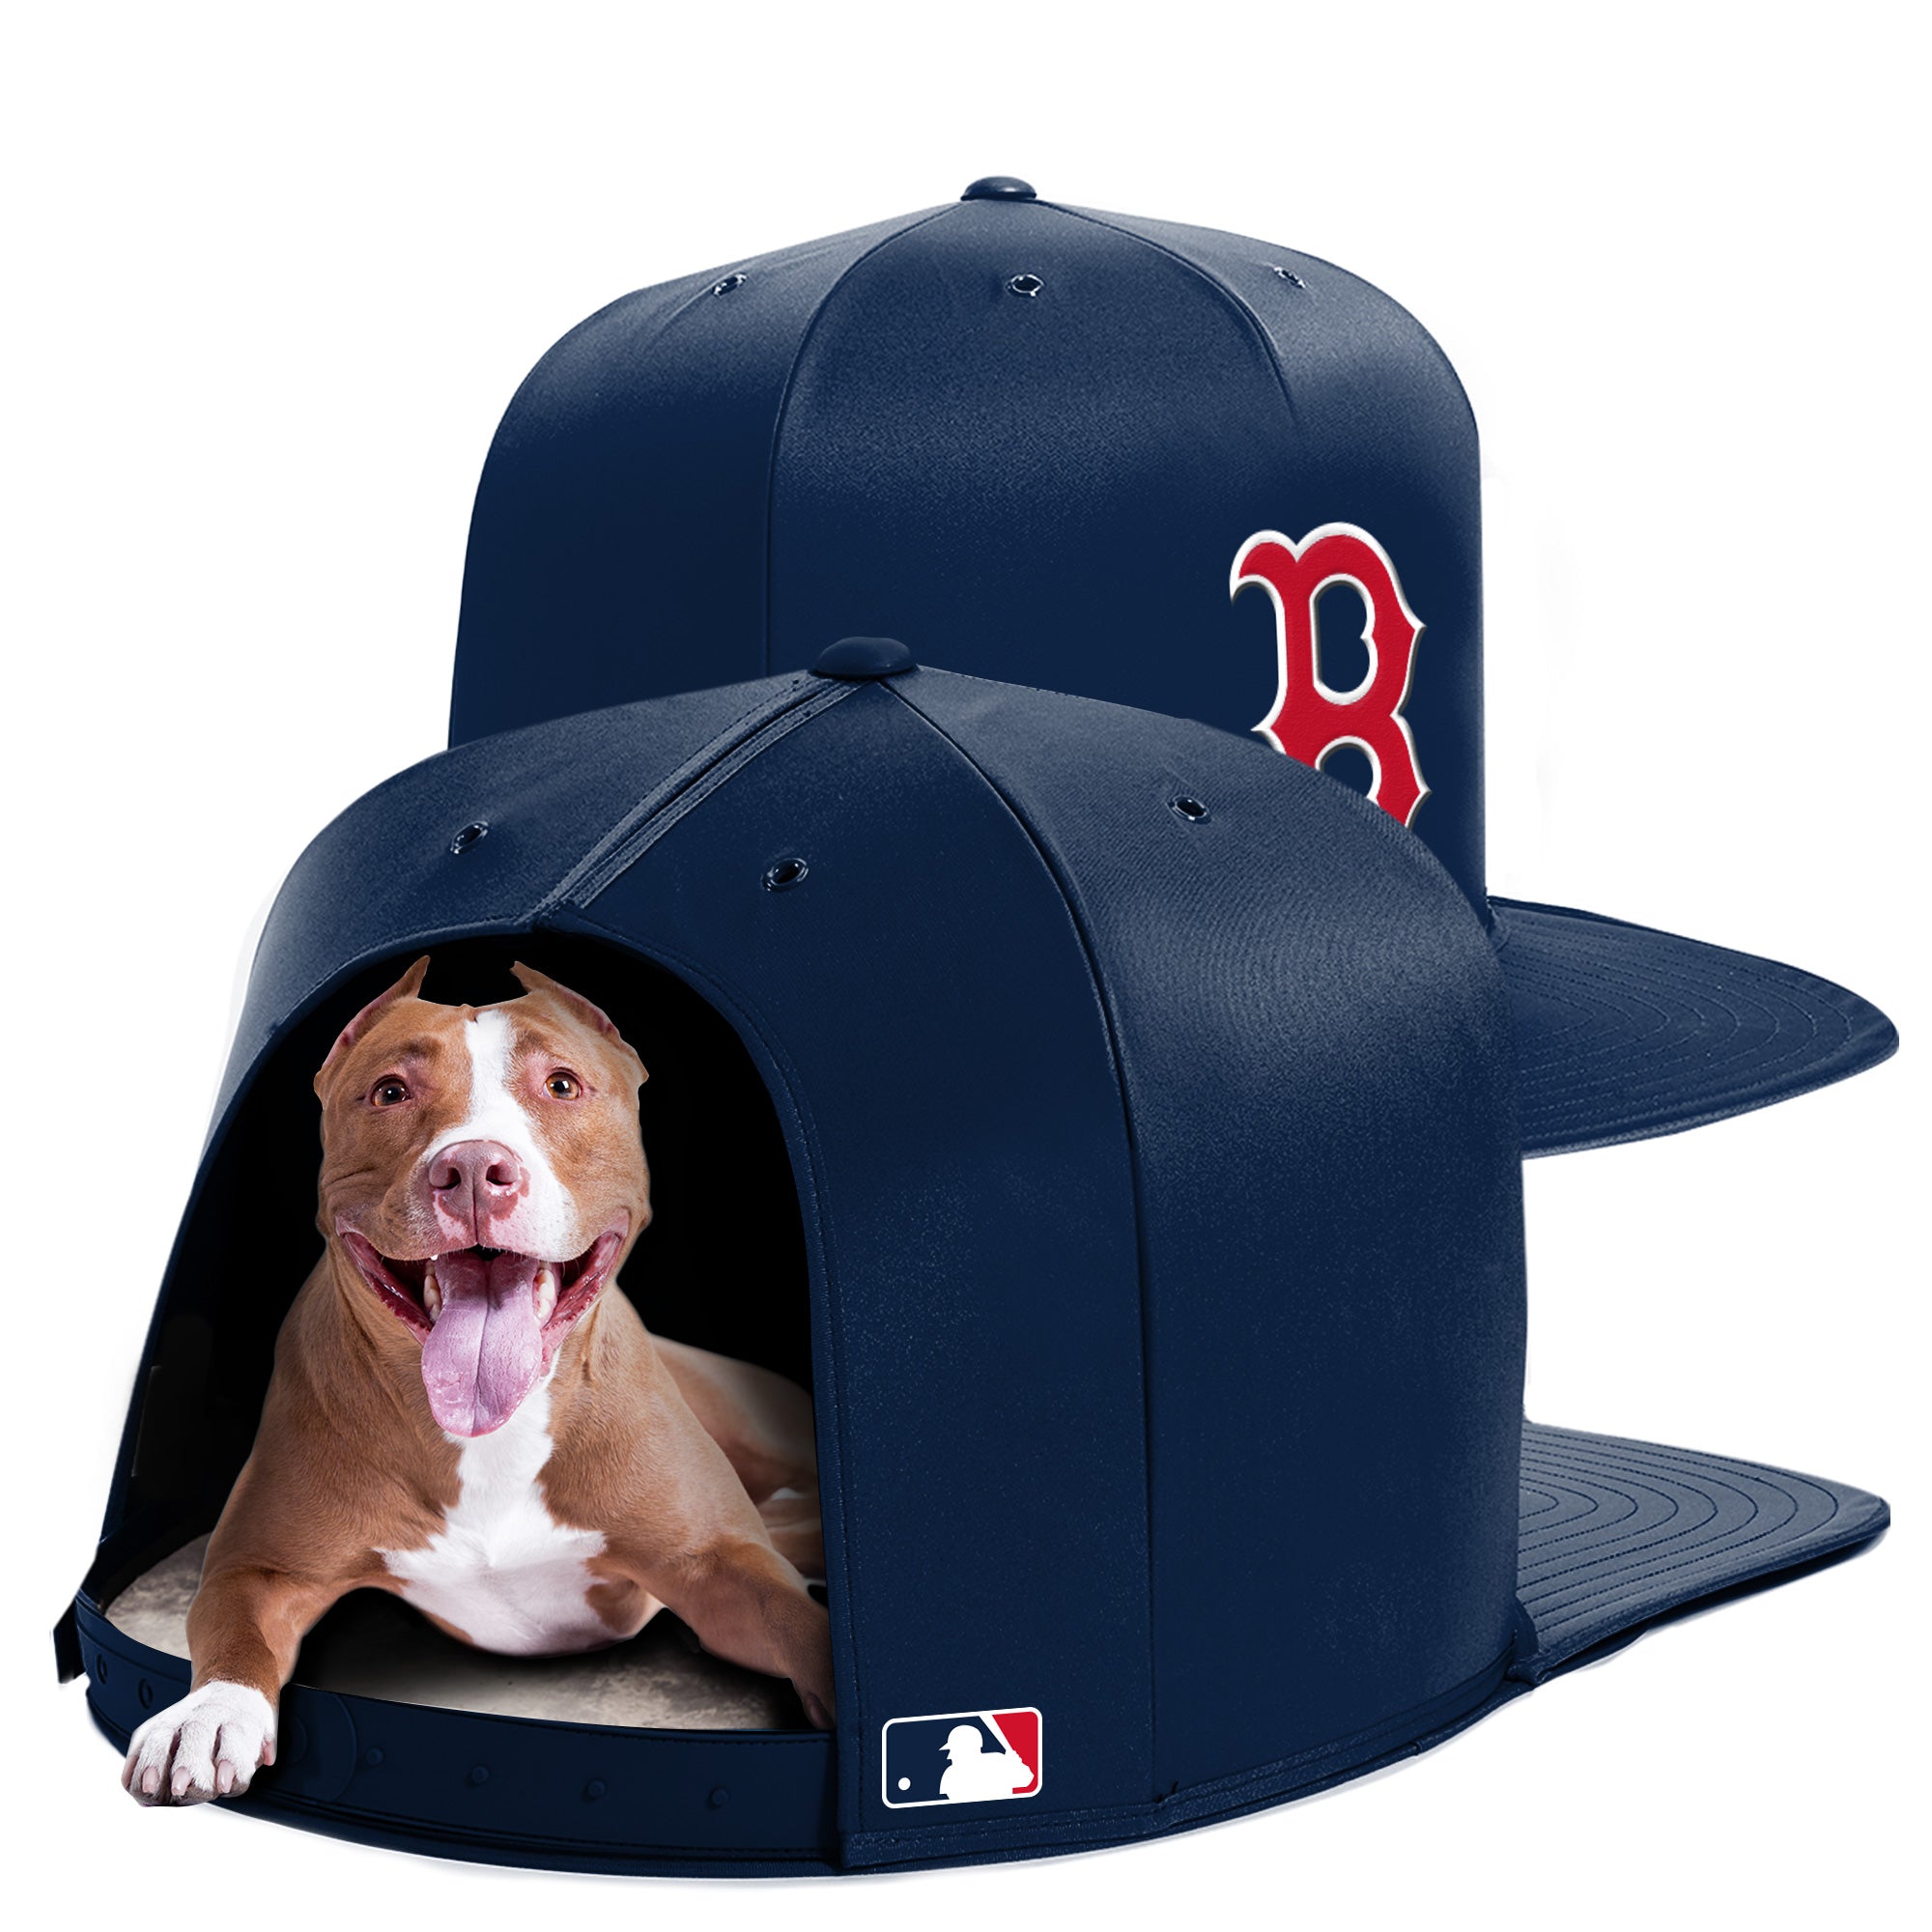 BOSTON RED SOX NAP CAP PLUSH DOG BED - Nap Cap